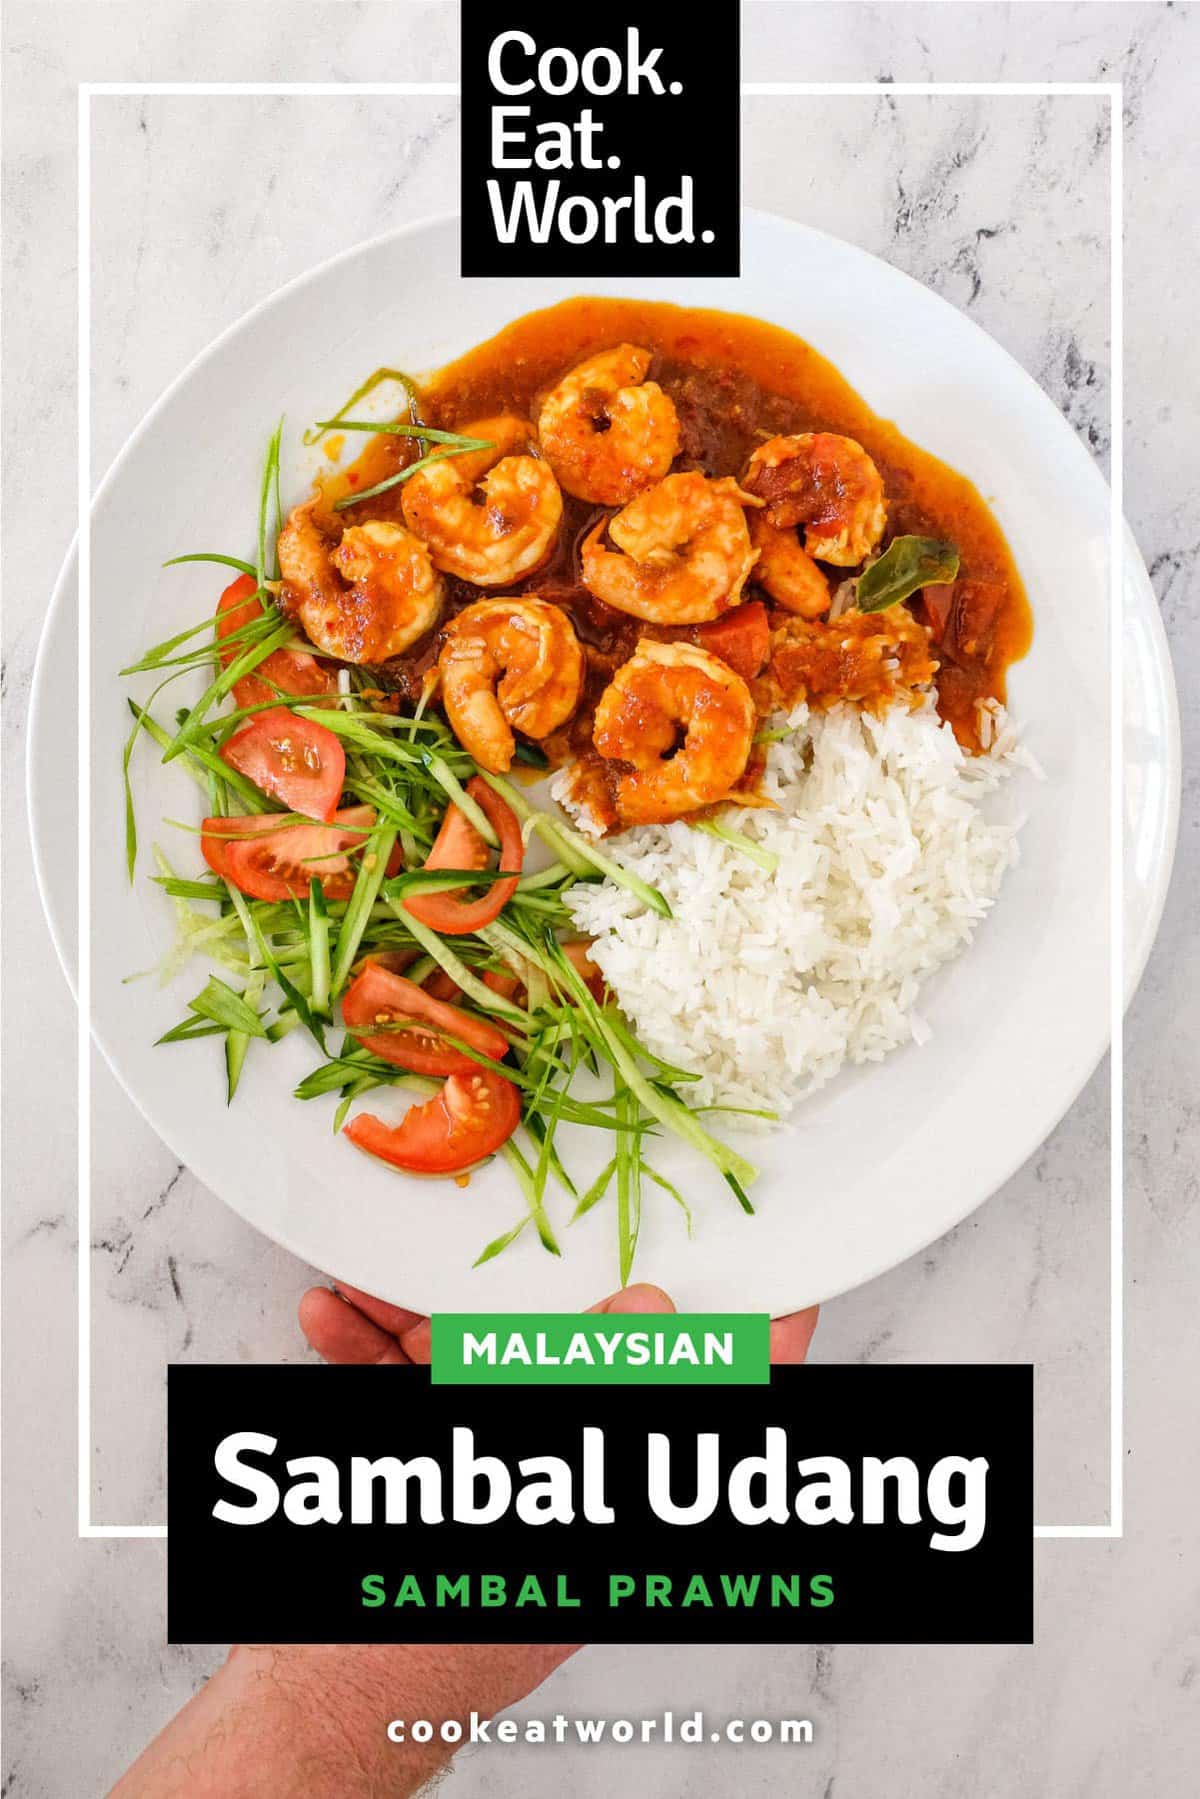 A plate of Sambal Udang (Sambal Prawns) with rice and a salad